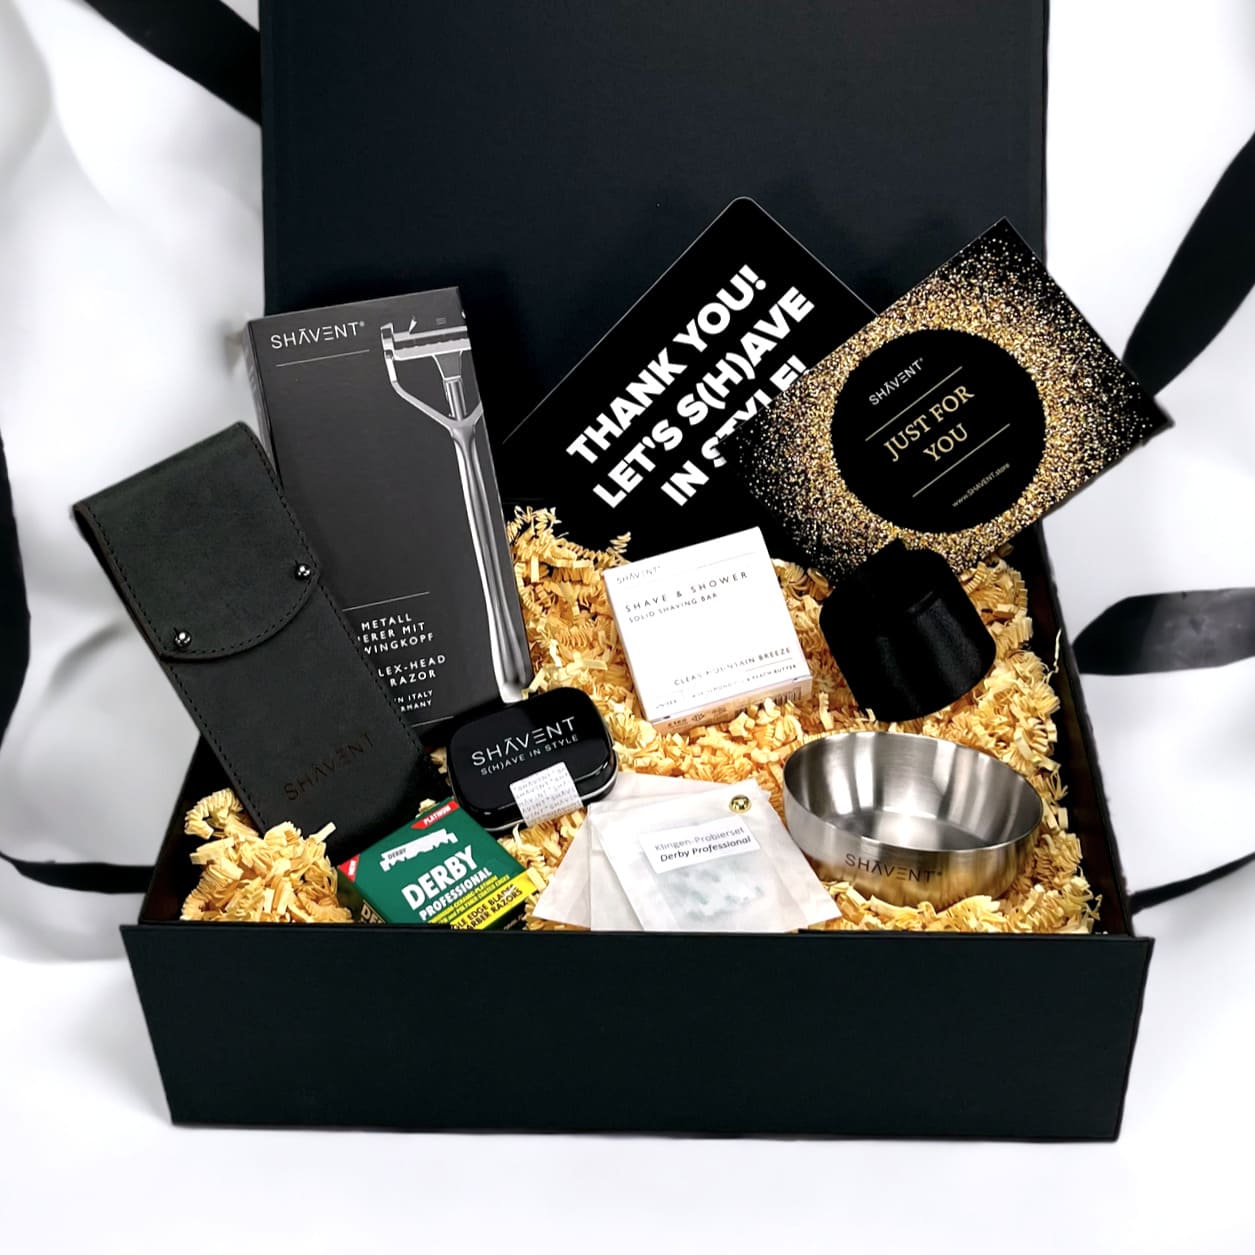 SHAVENT Christmas gift box - Gentlemen